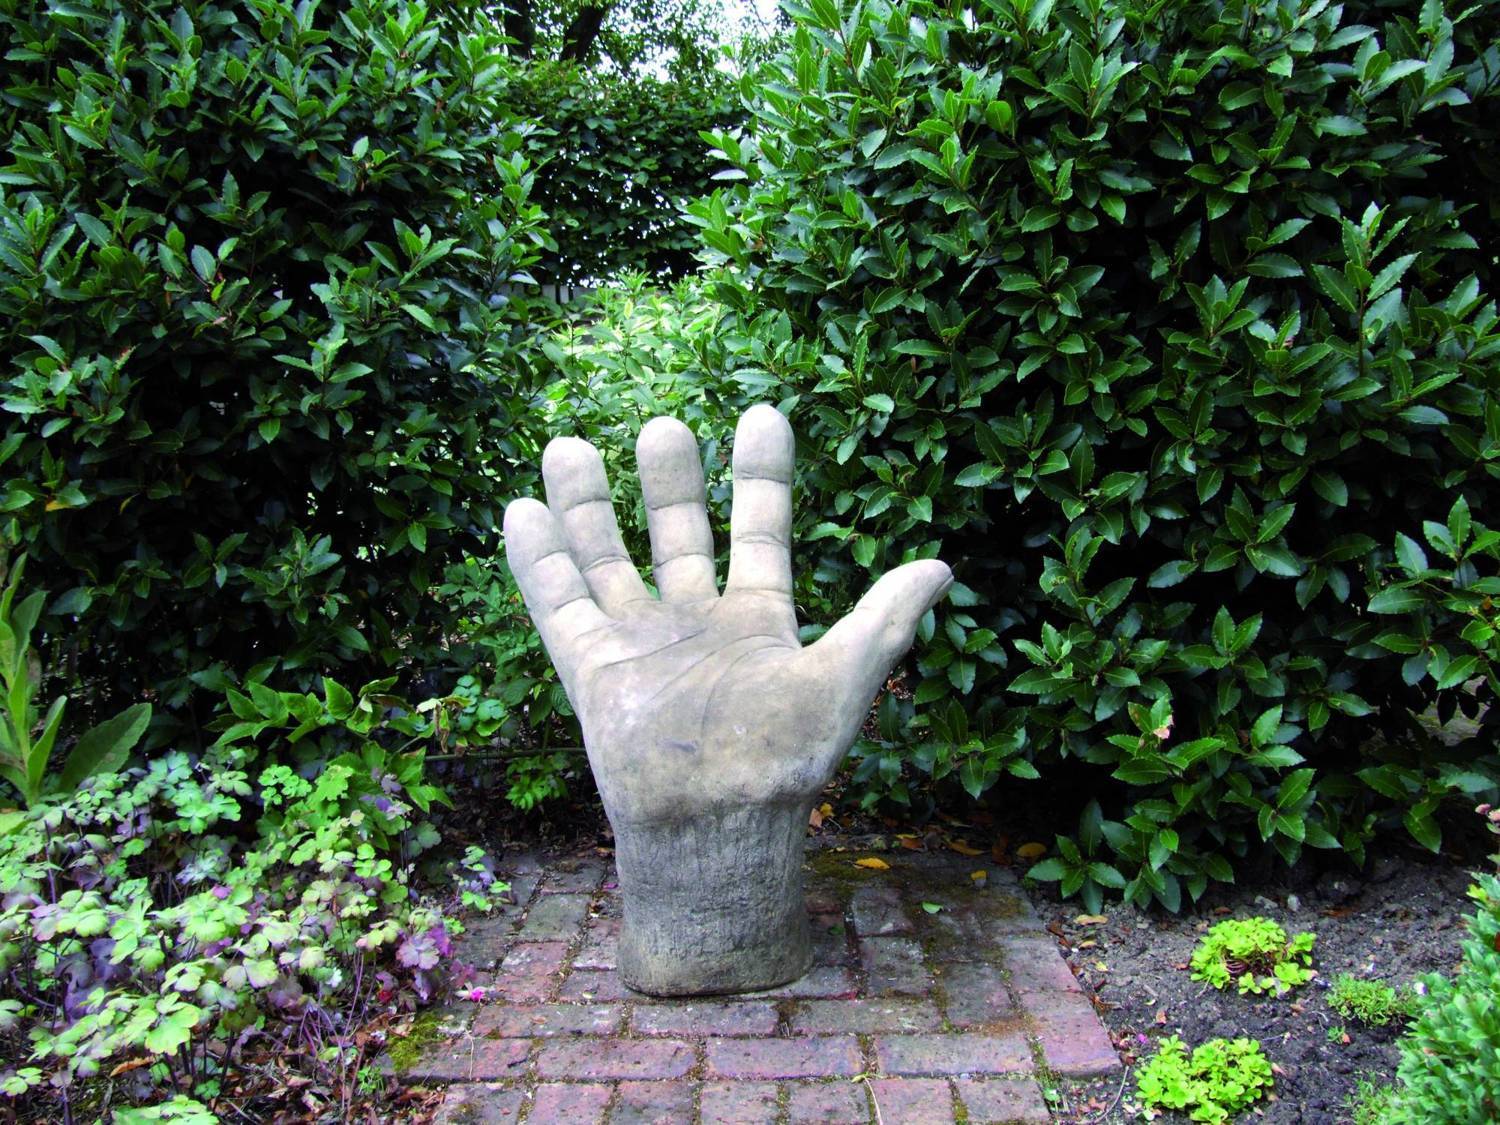 Giant Right Hand Garden Statue